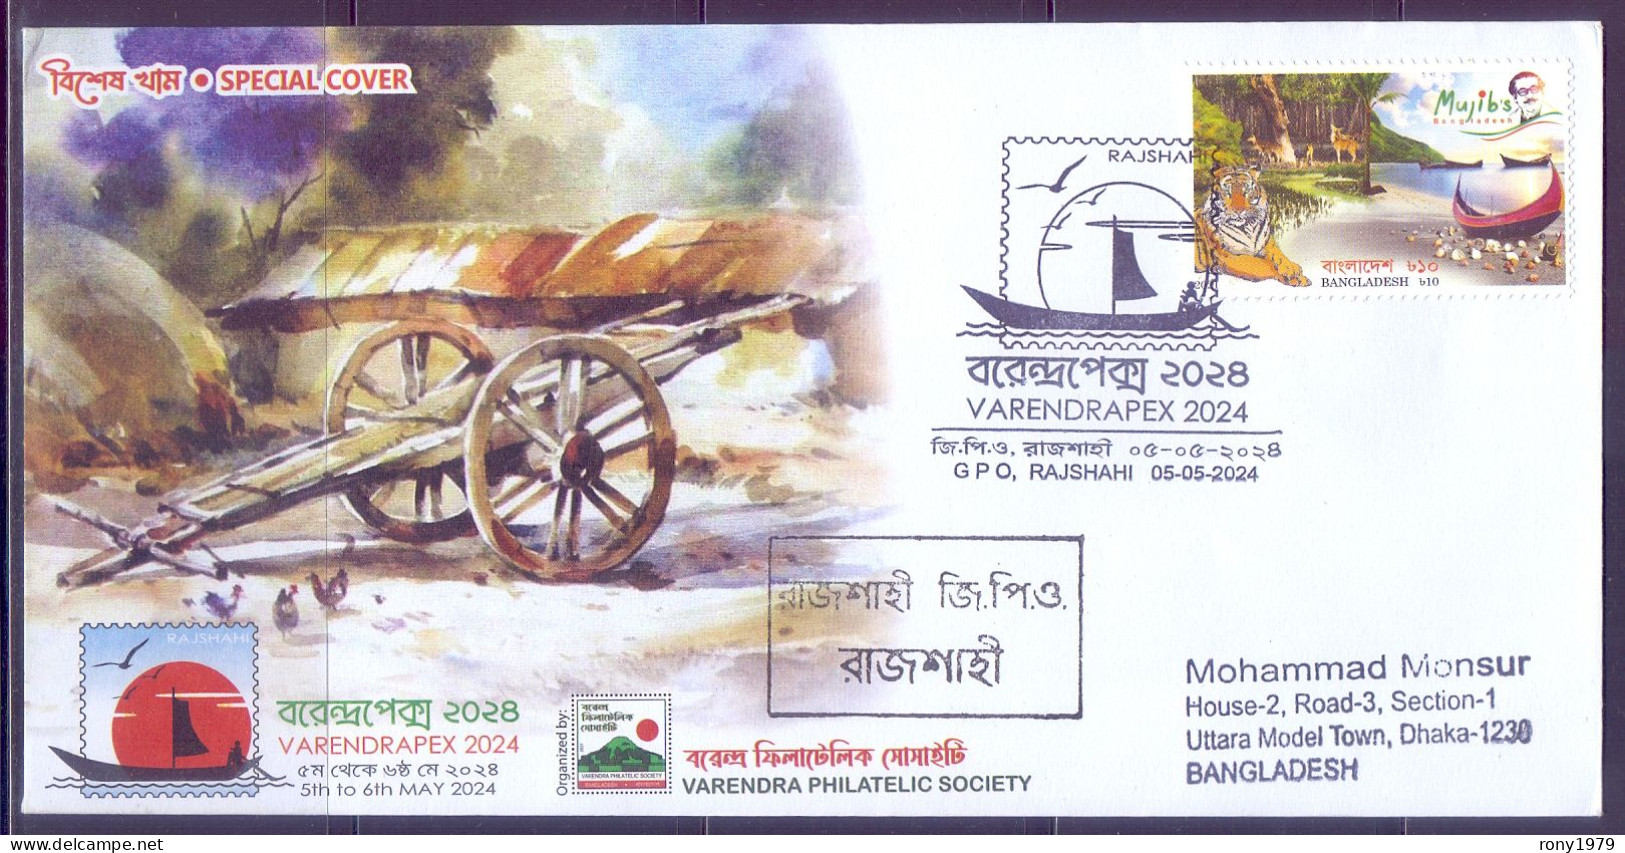 Bangladesh 2024 Varendrapex Stamp Exhibition Wheelbarrow Rooster Village Hut Sail Boat REG Special Cover Pictorial PM-1 - Exposiciones Filatélicas